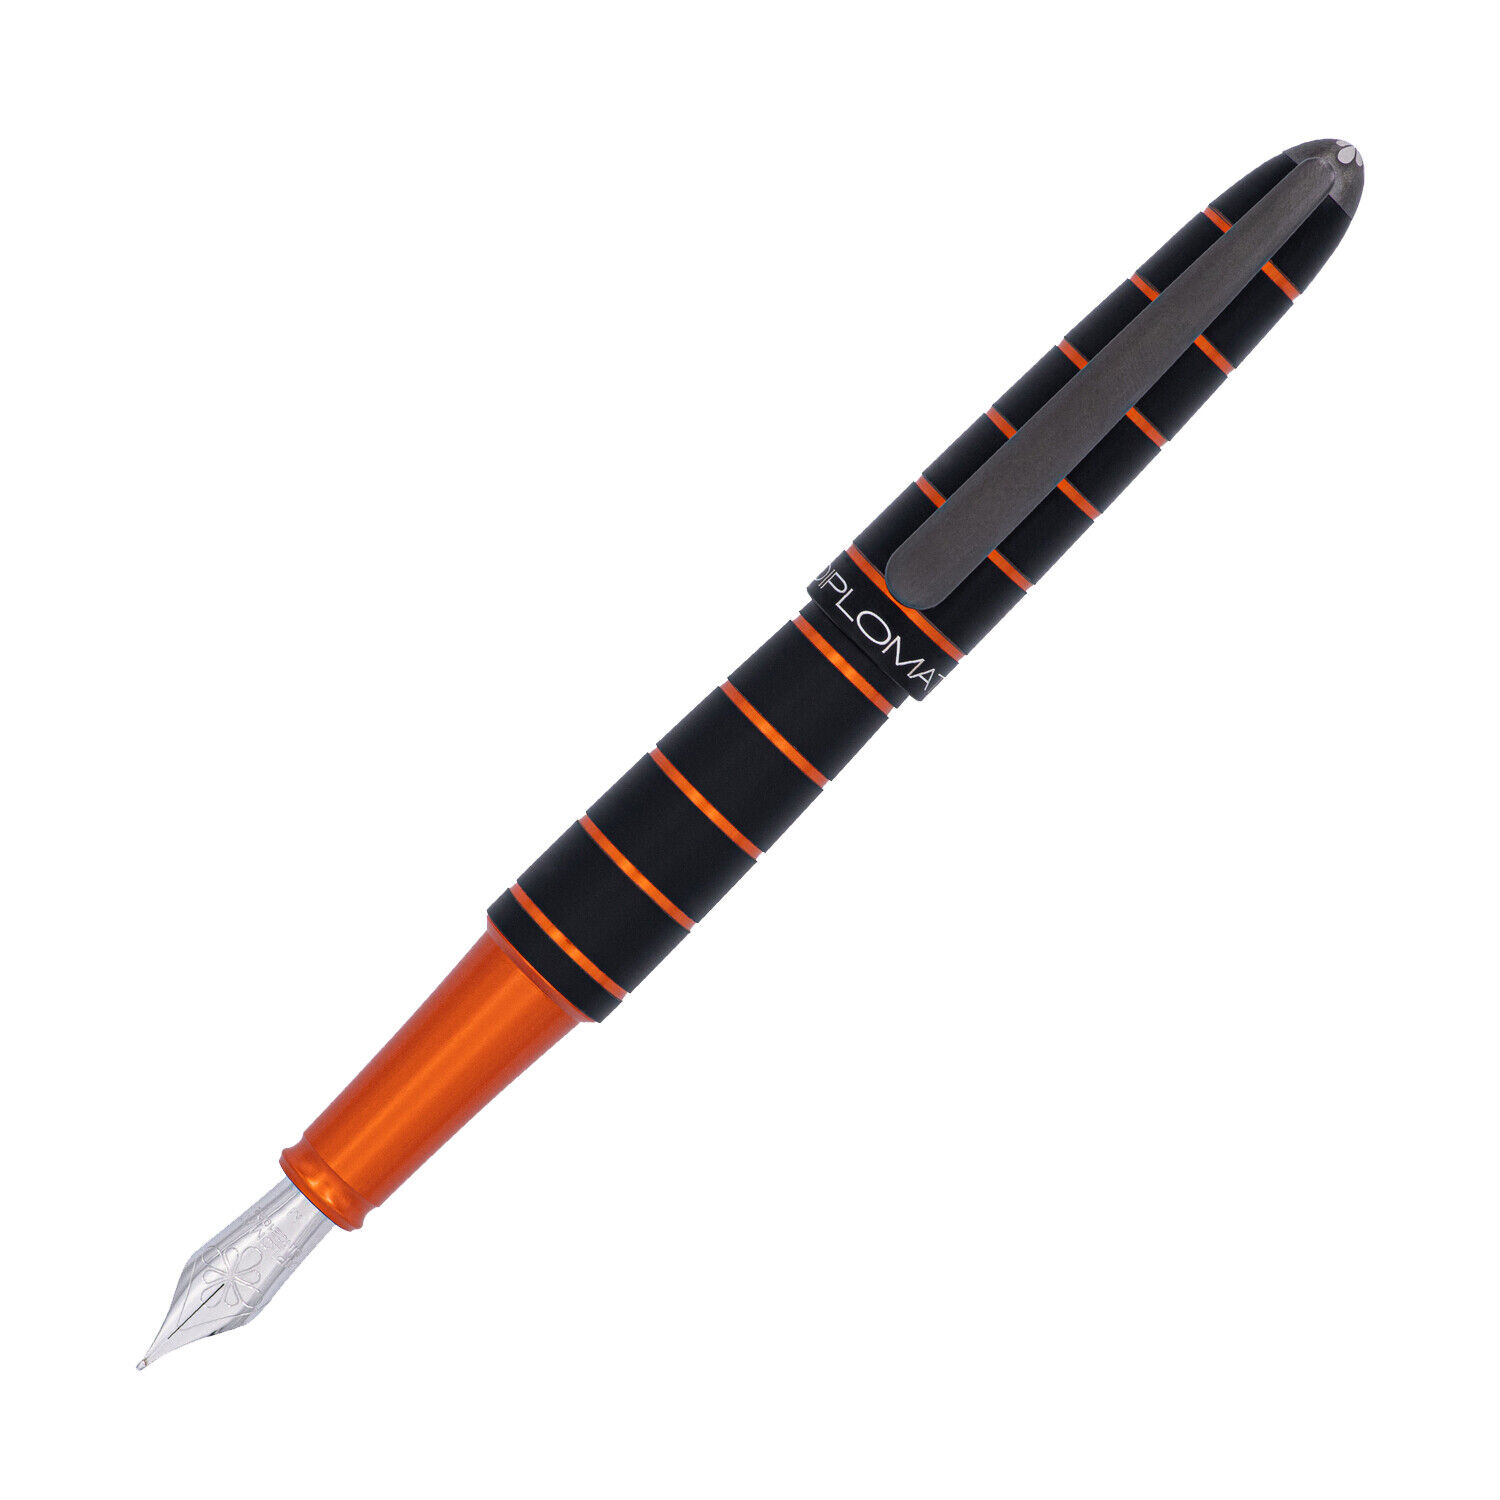 Diplomat Elox Fountain Pen in Ring Black/Orange - Broad Point - NEW in Box